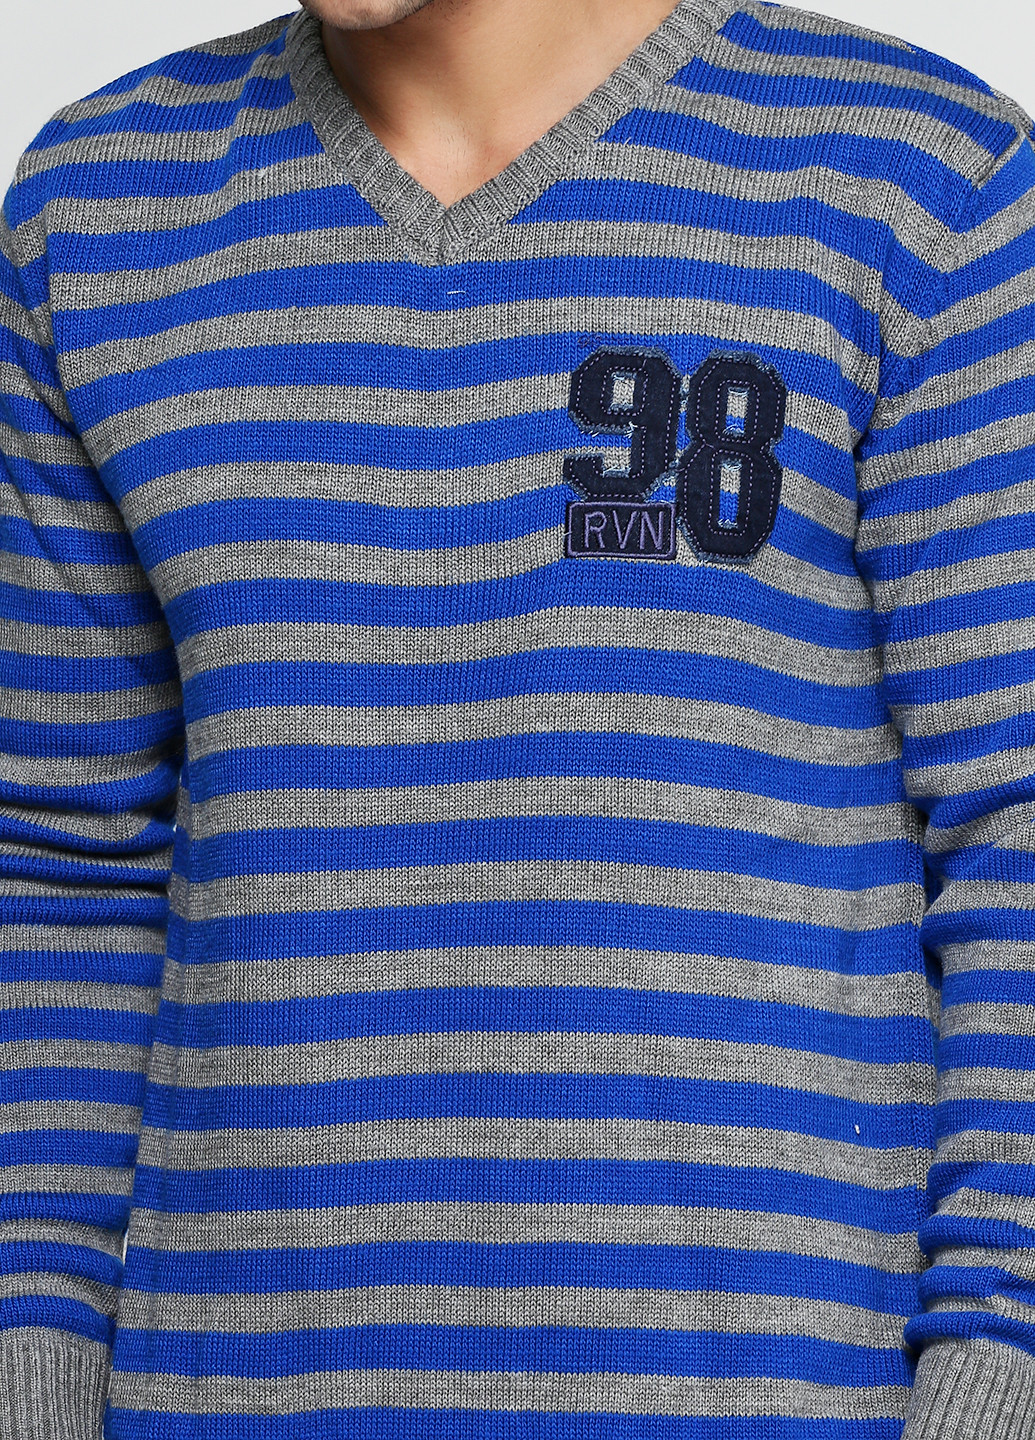 Синий демисезонный пуловер пуловер Яavin